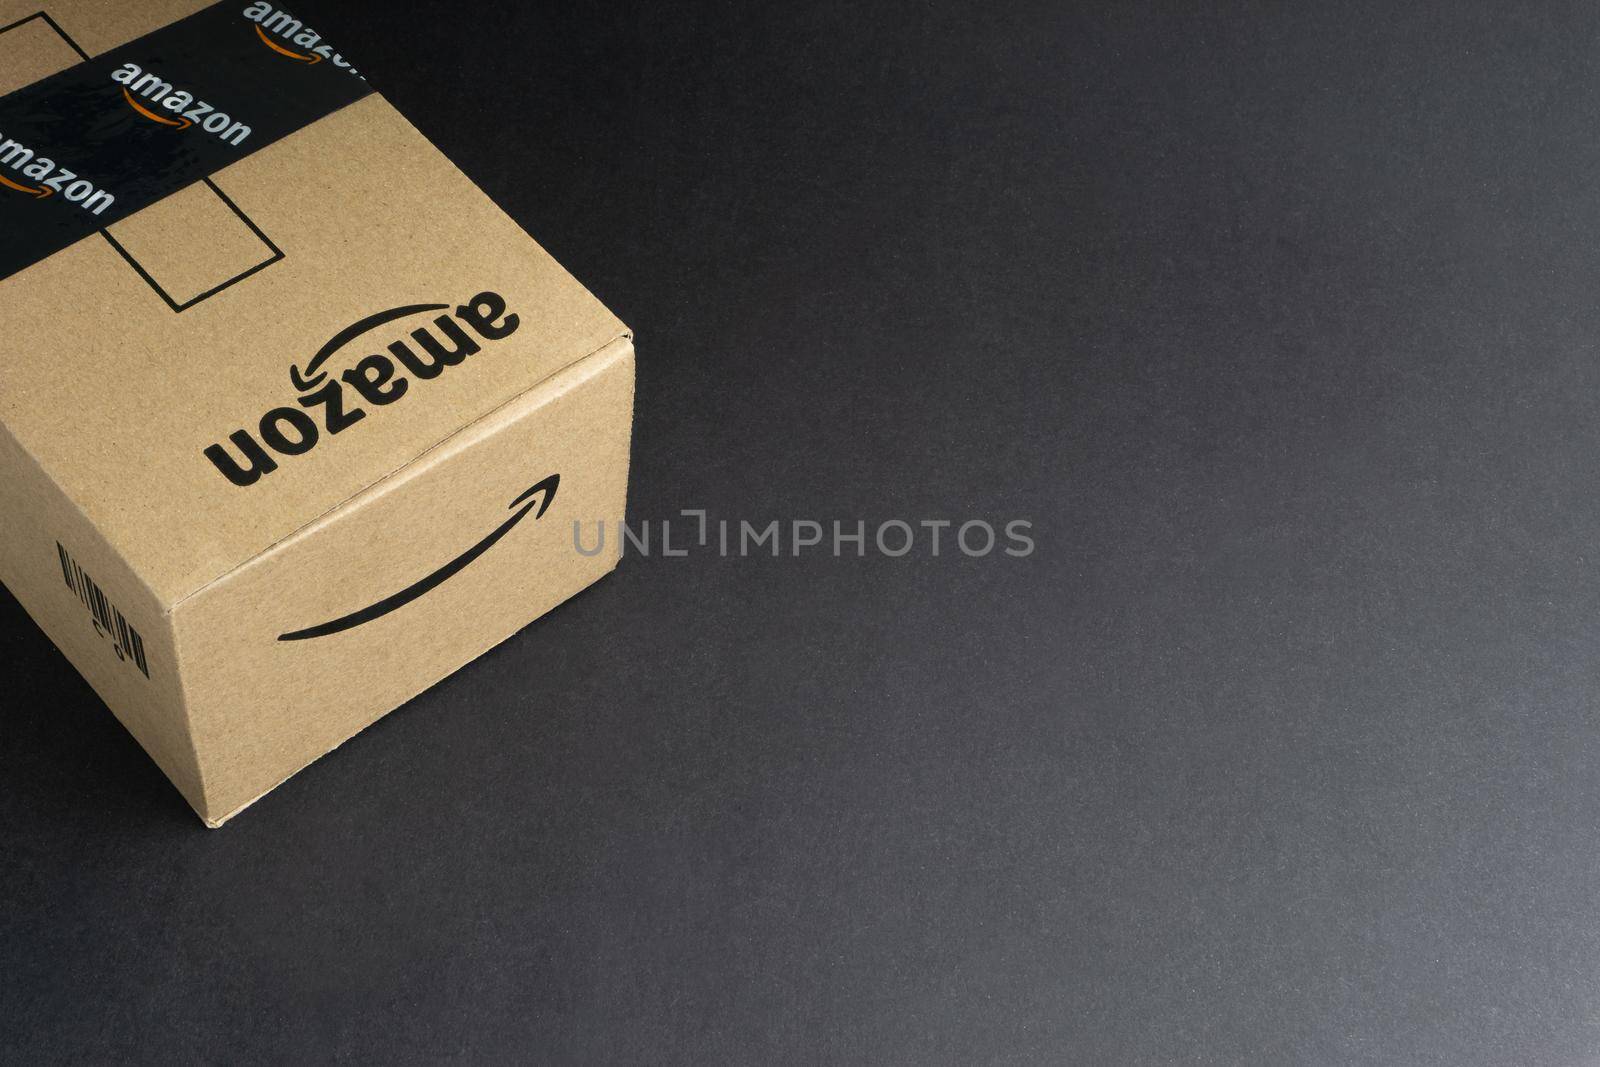 Kuala Lumpur, Malaysia - April 1, 2020 : Amazon Prime box or Amazon shipping box on black background. Crop fragment, business concept